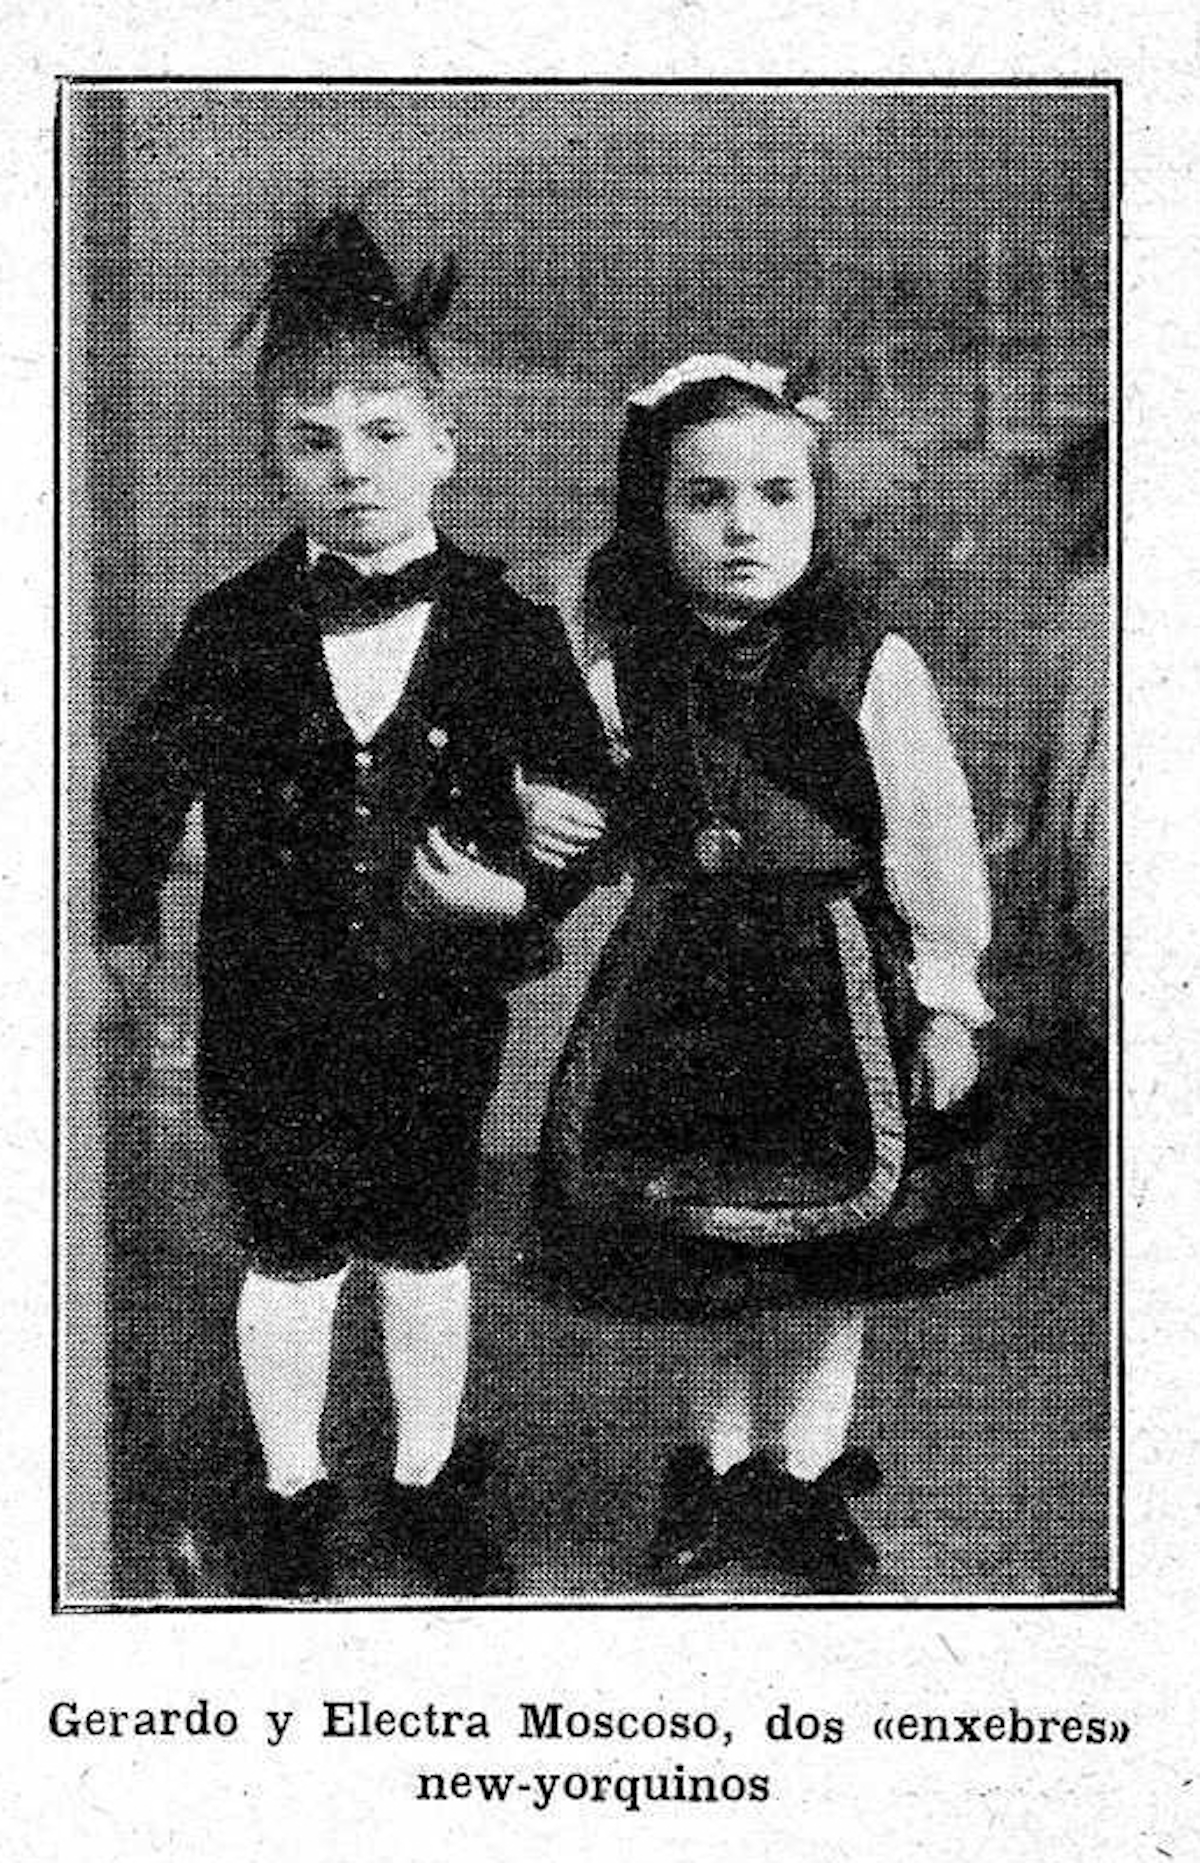 “Traditional” Galician children in New York (Vida gallega, May 1910)